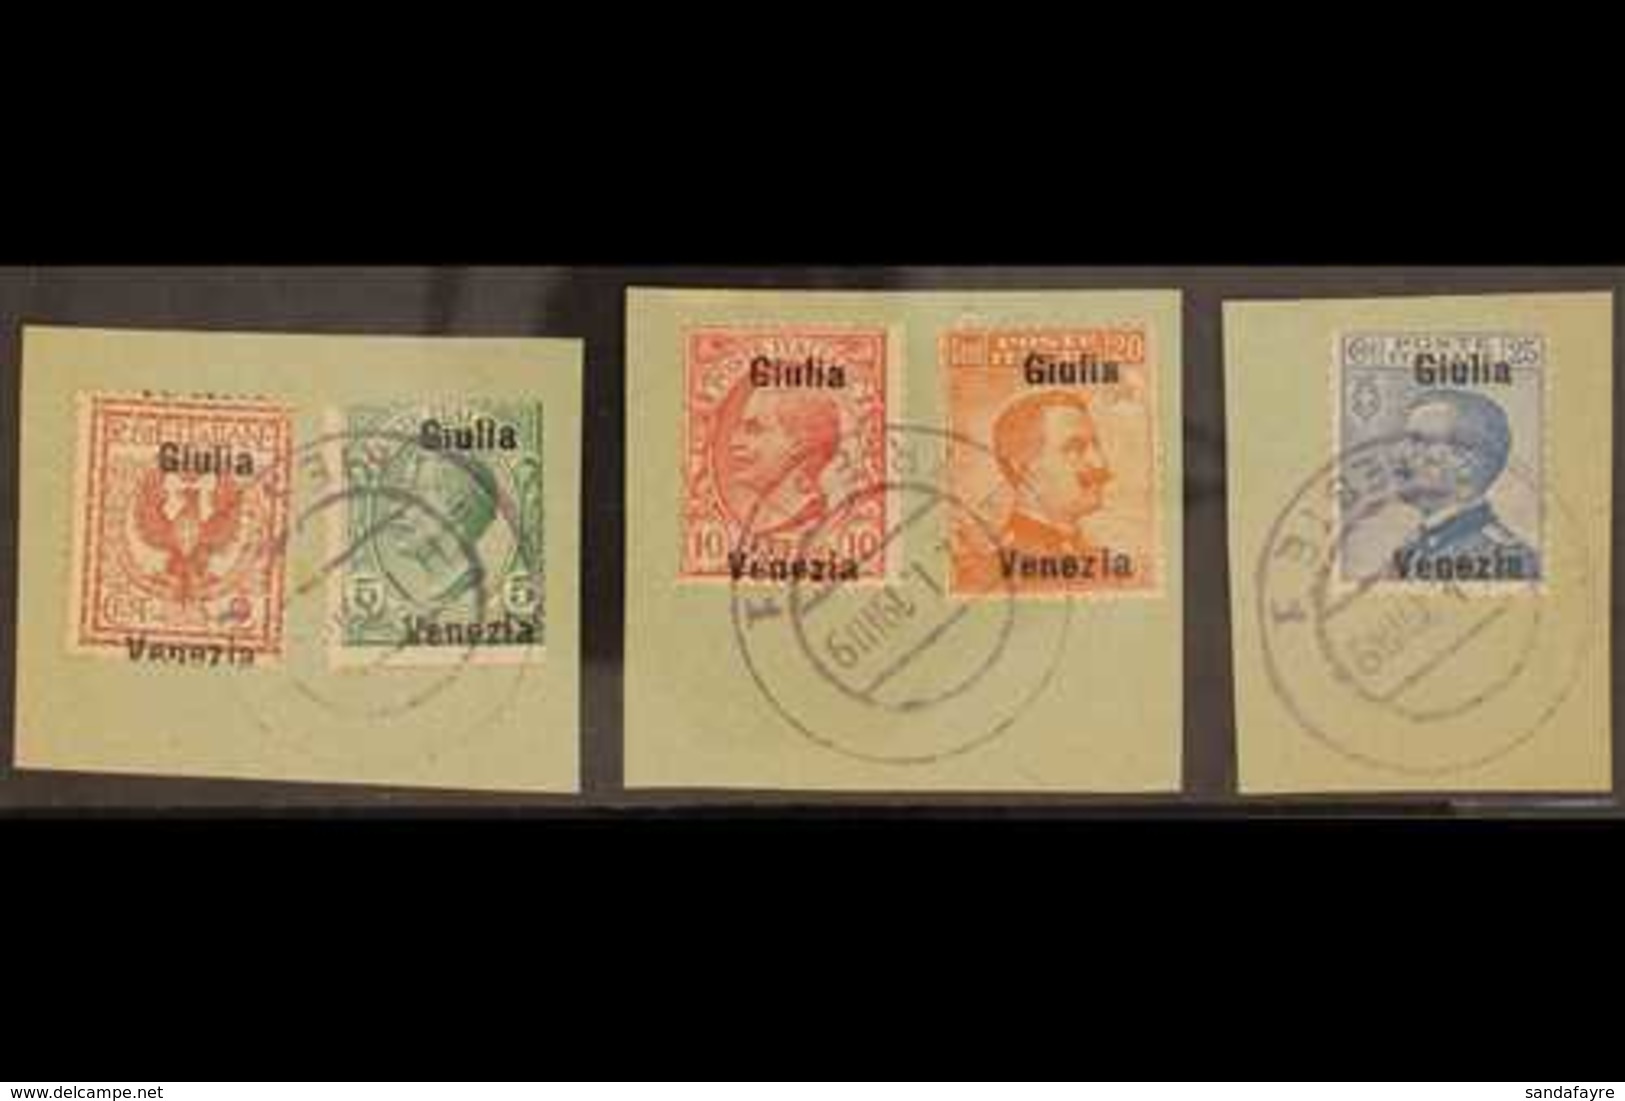 VENEZIA GIULIA 1918-19 2c, 5c, 10c, 20c & 25c All With Vertically Displaced Overprints Reading "GIULIA / VENEZIA", Sasso - Unclassified